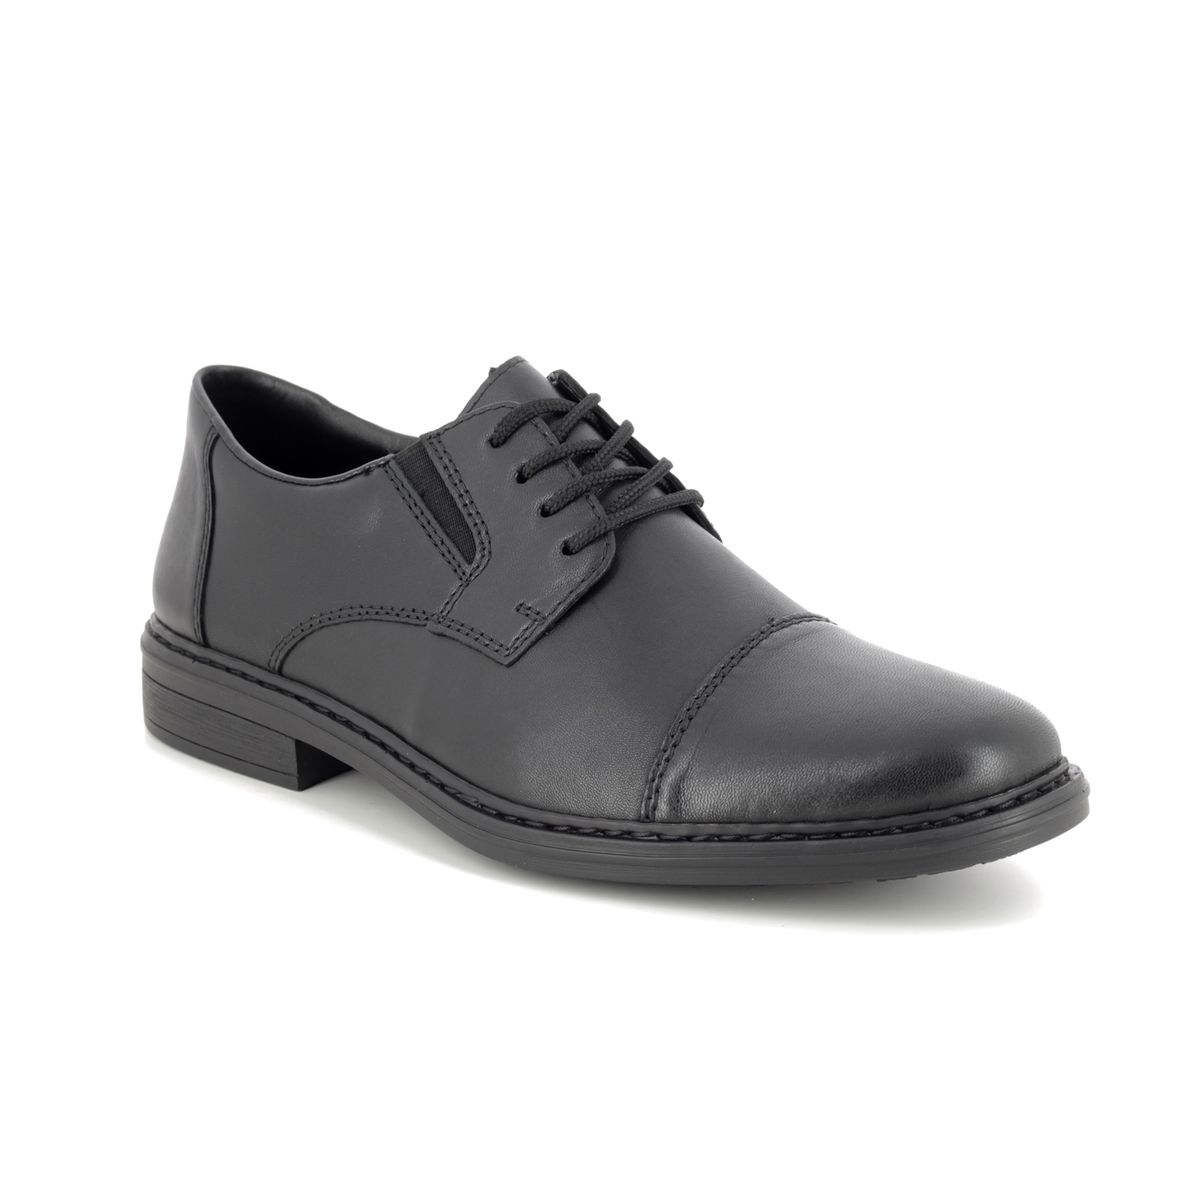 Rieker 17642-00 Black leather formal shoes